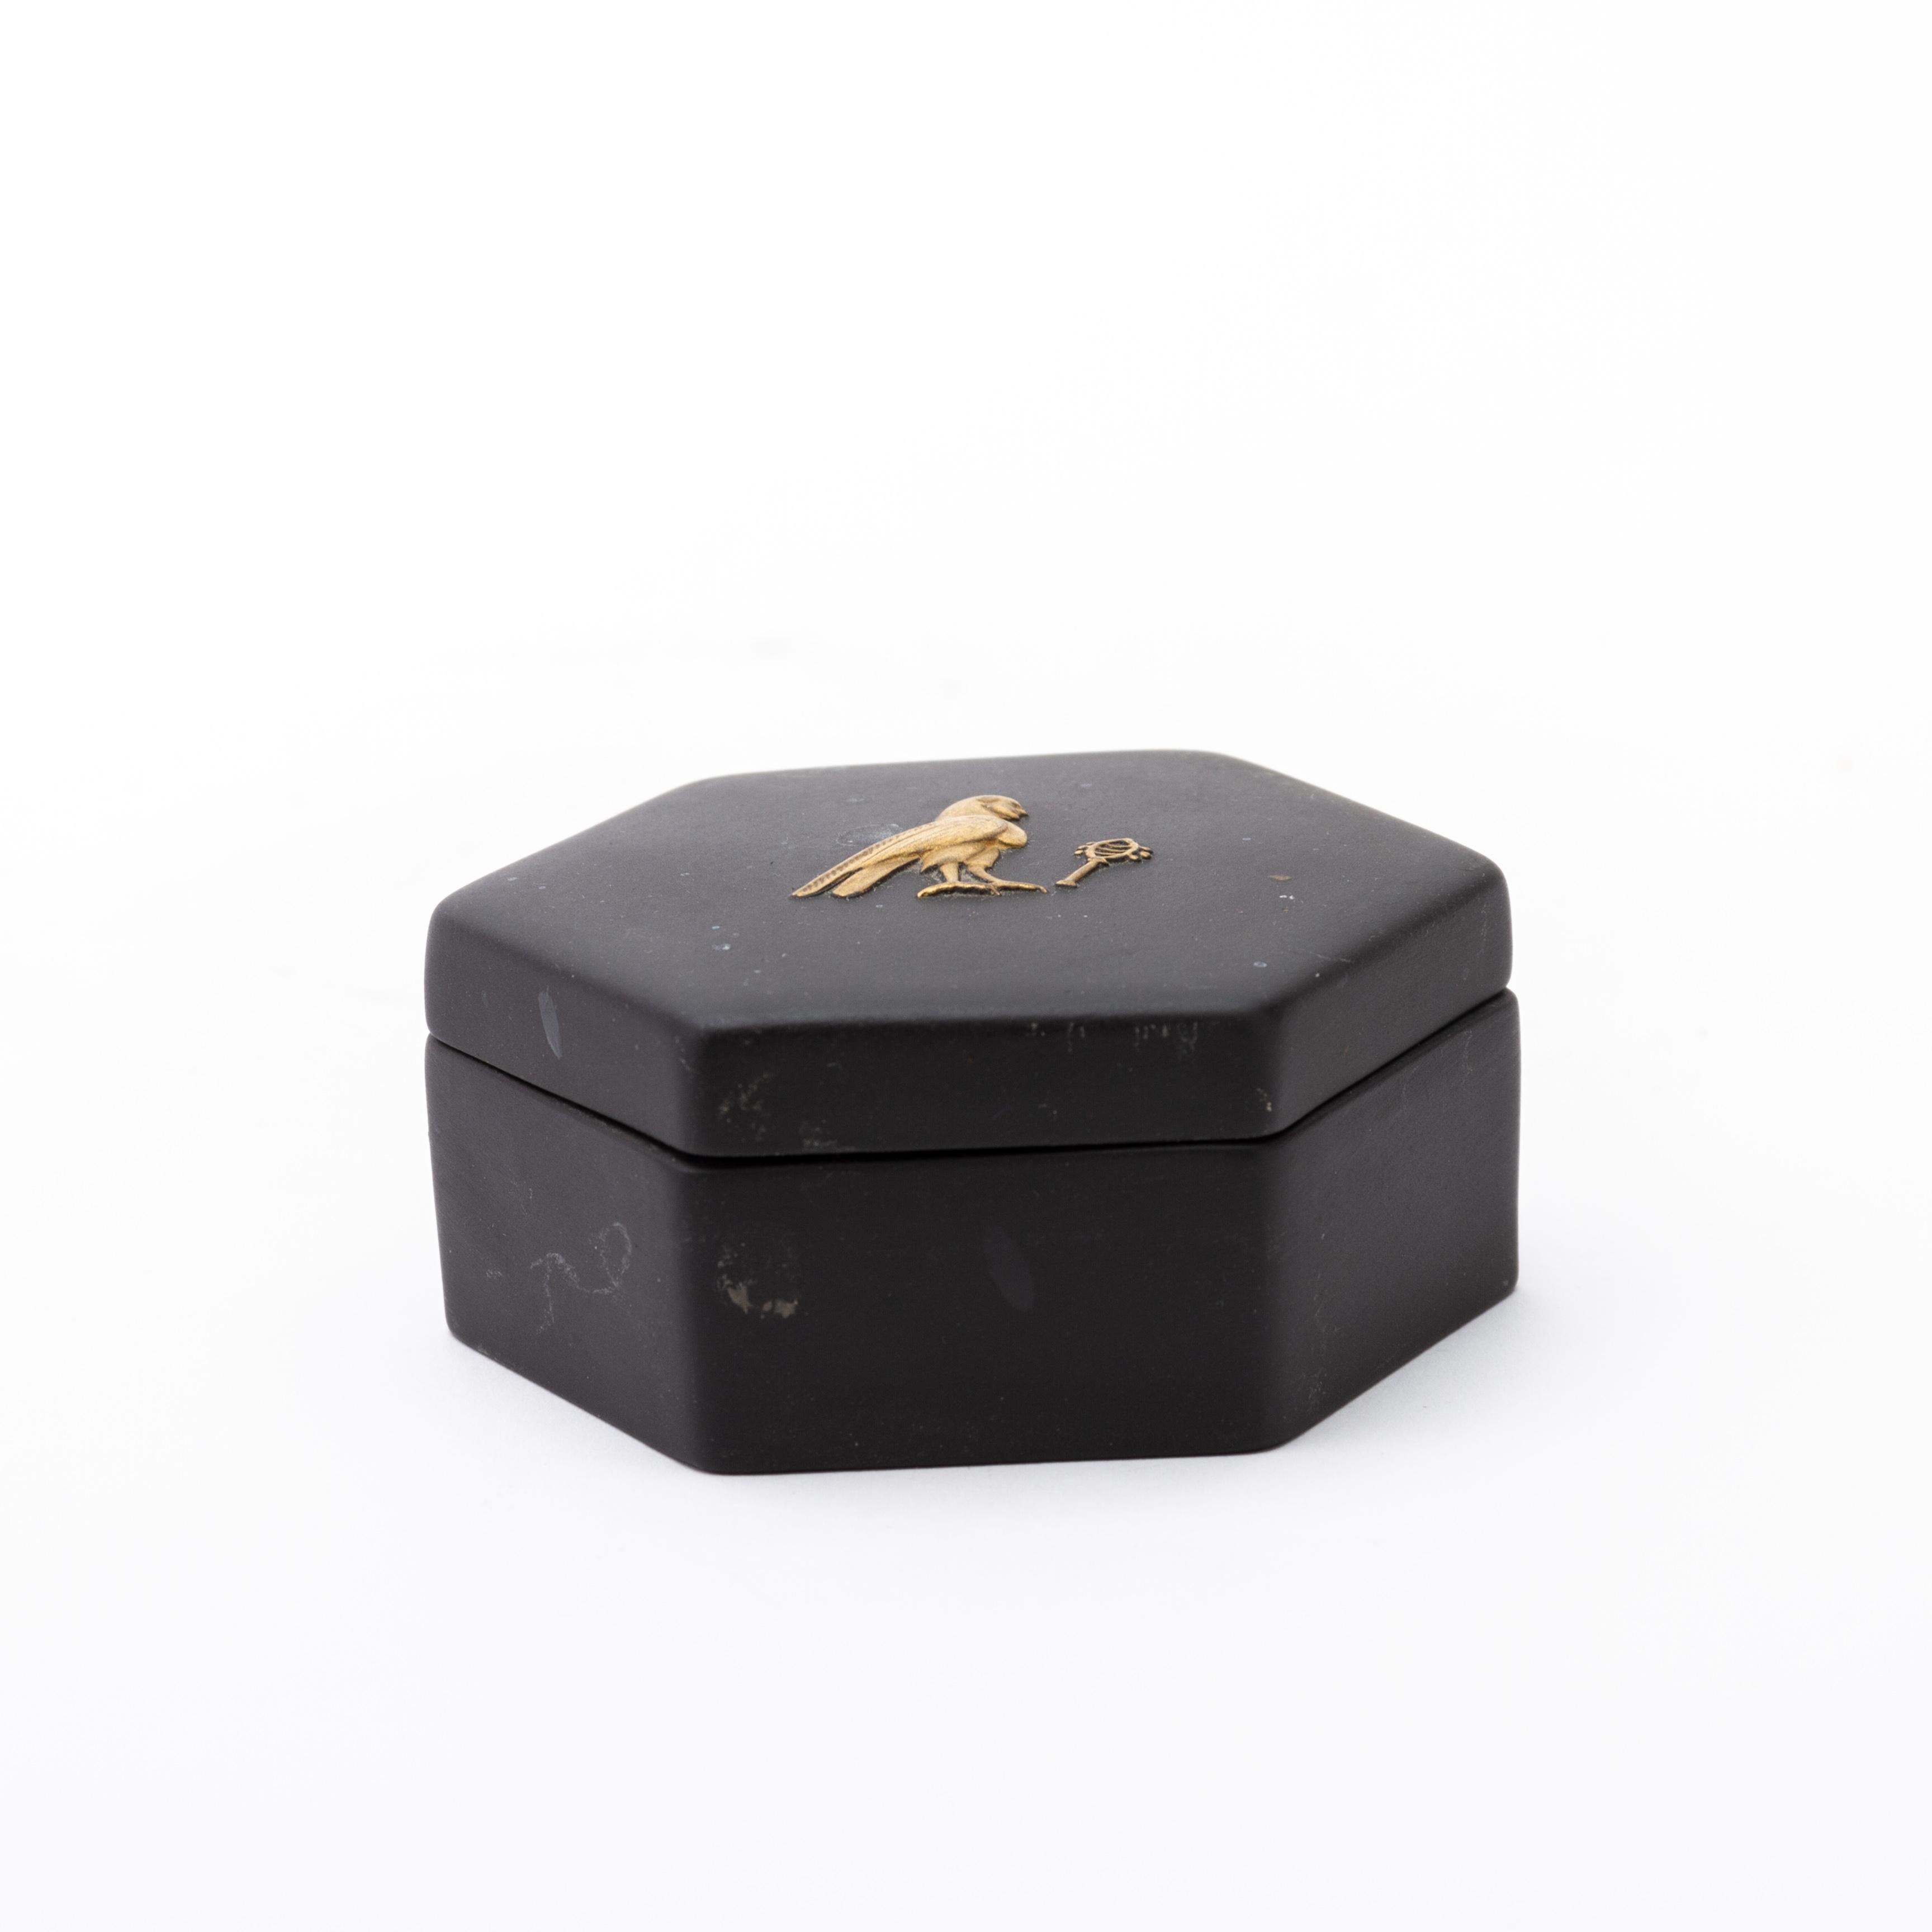 Wedgwood Black Basalt Egyptian Revival Cameo Circular Trinket Box
Good condition
Free international shipping.